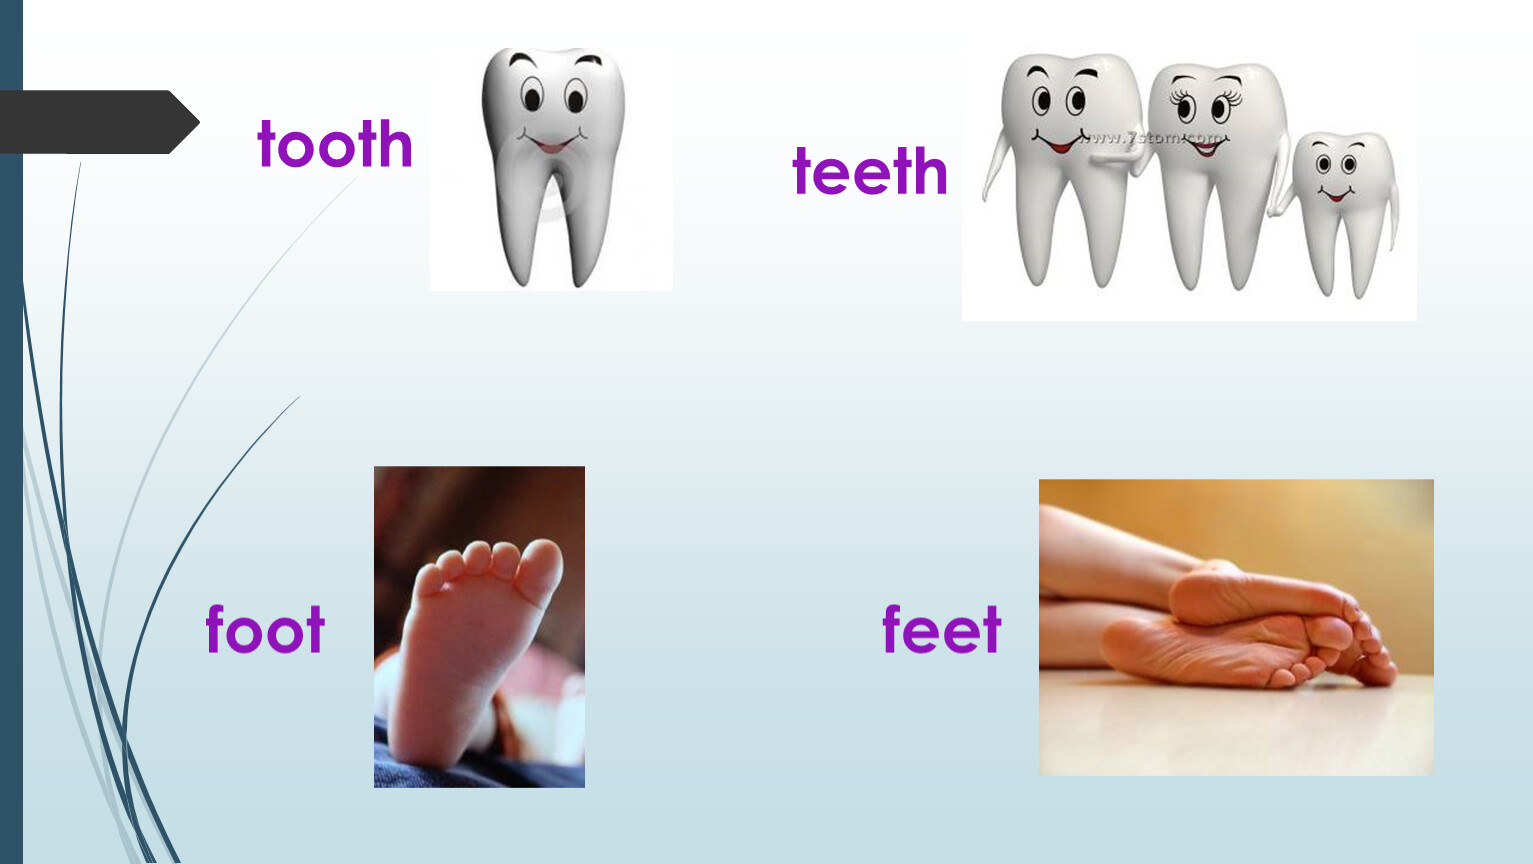 Foot tongue. Tooth Teeth foot feet правило. Tooth во множественном числе на английском. Зубы на английском языке. Множественное число в английском языке foot Teeth.